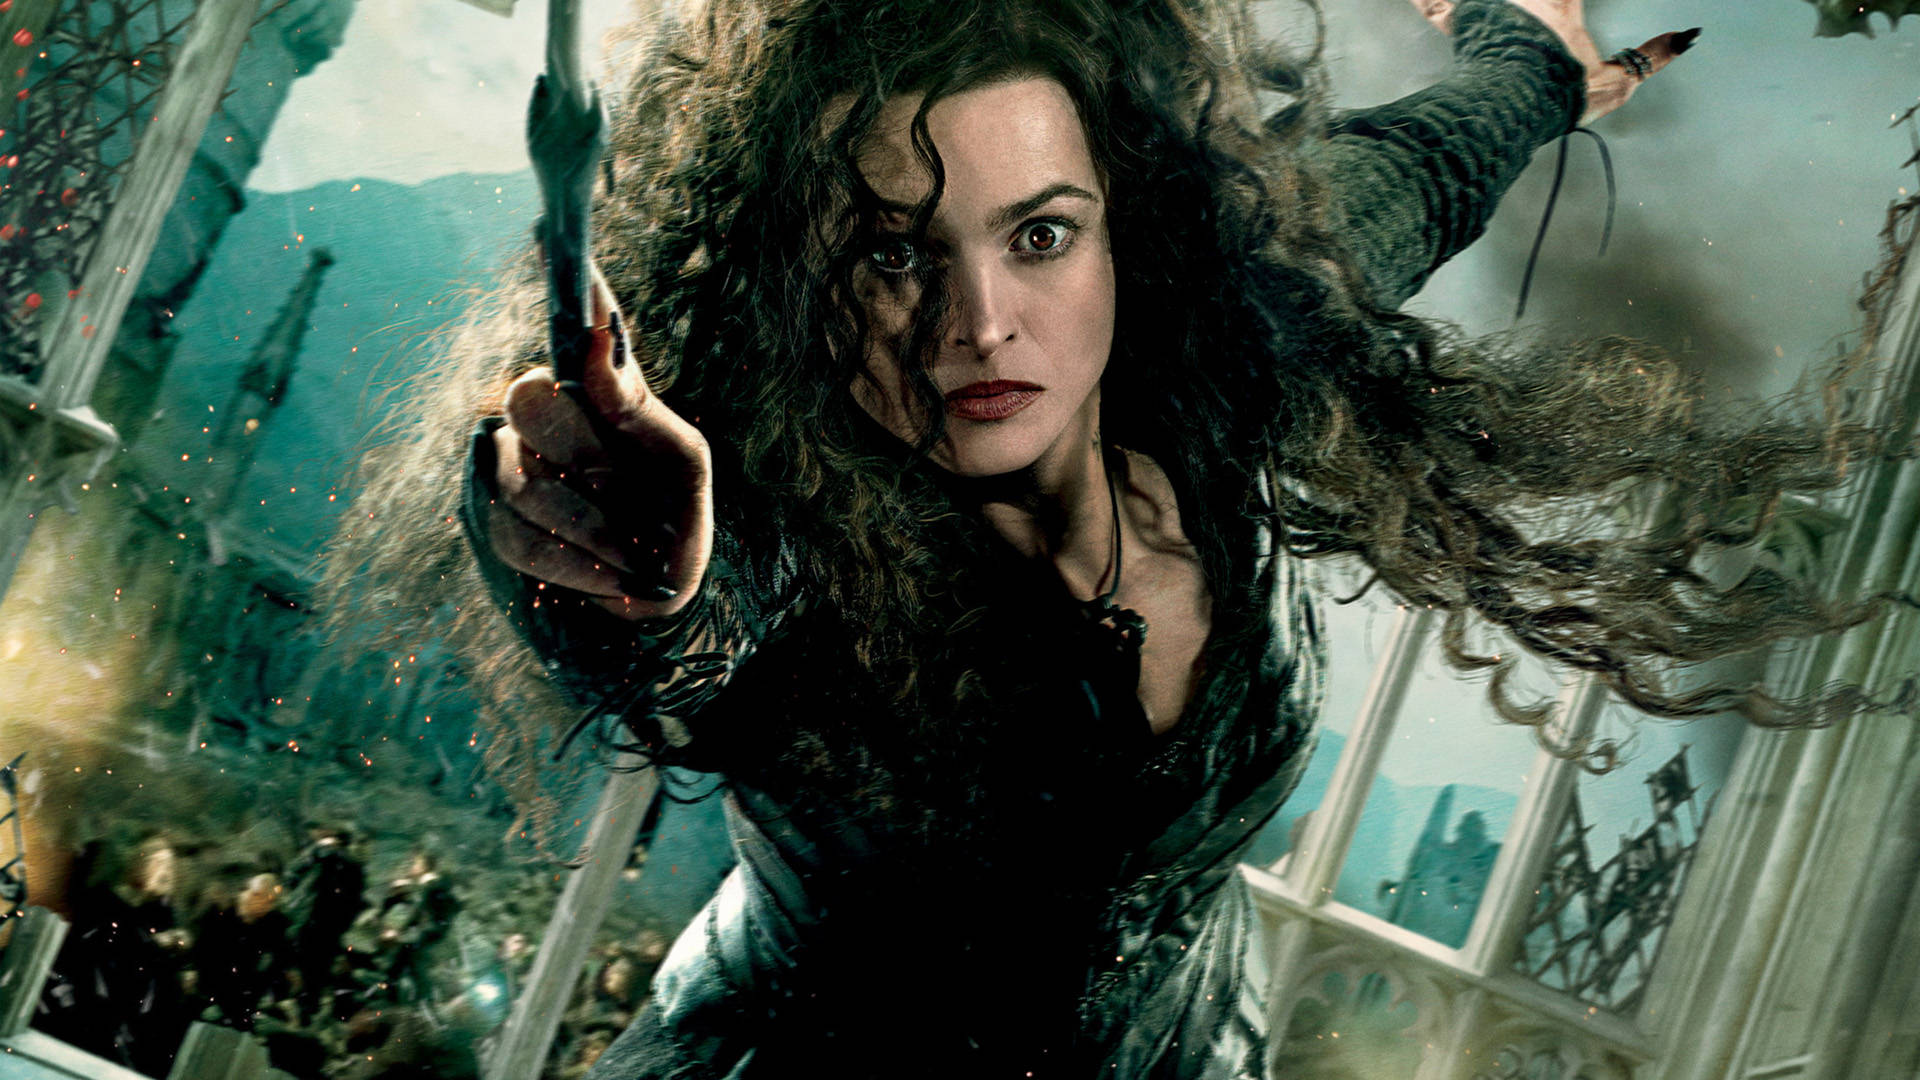 Helena Bonham Carter As Bellatrix Lestrange